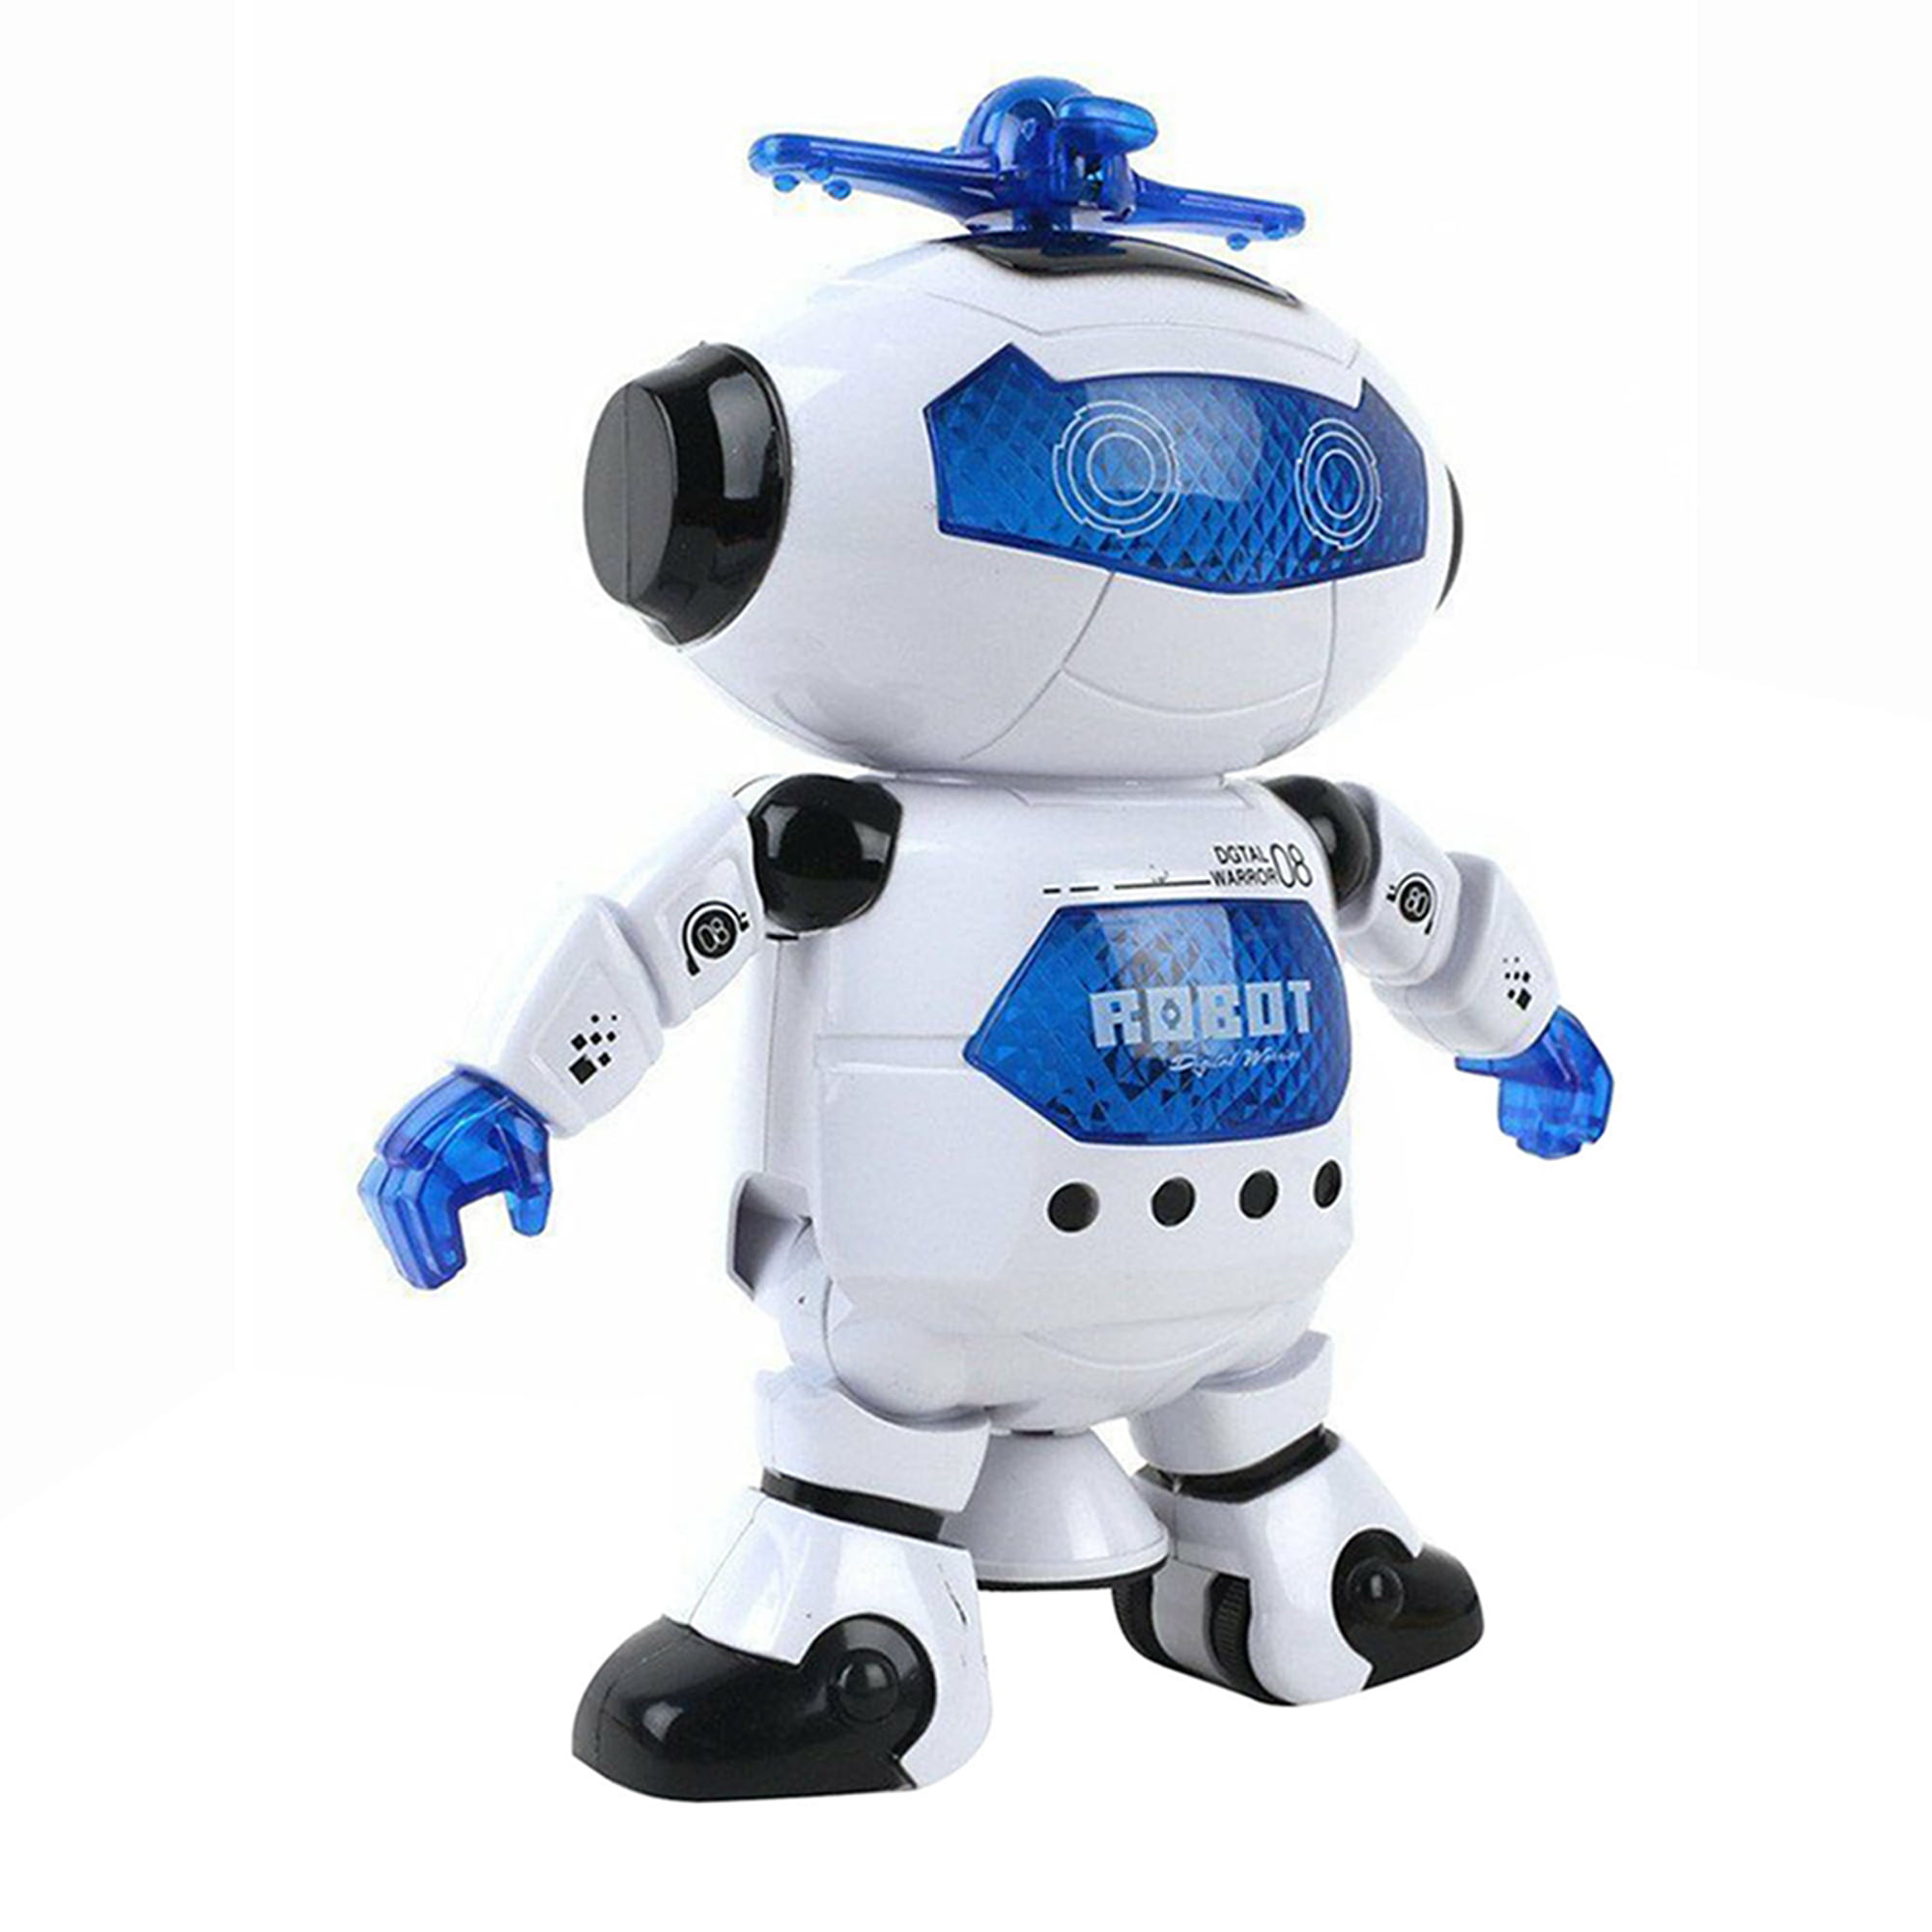 Toys For Boys Robot Kids Toddler Robot Dancing Musical Toy Birthday Xmas Gift 